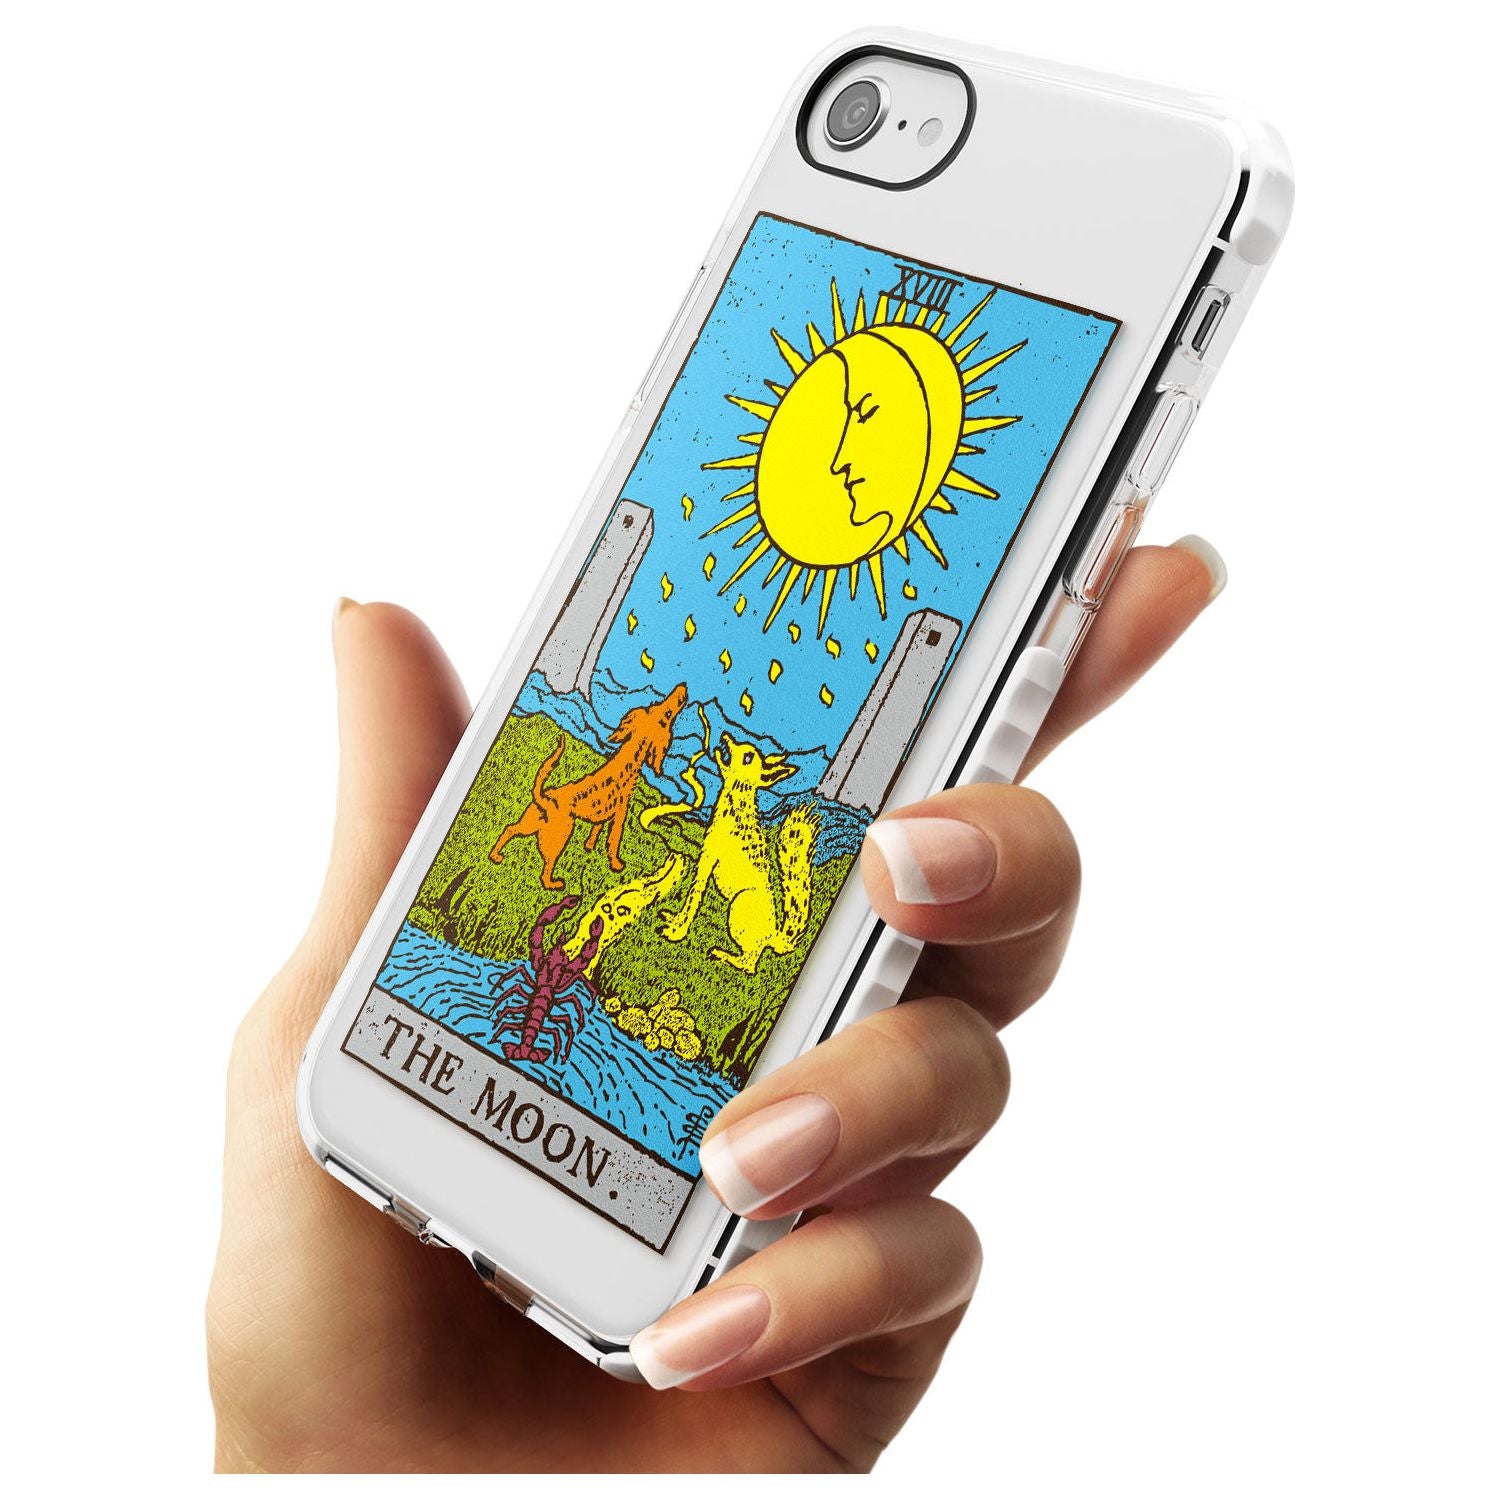 The Moon Tarot Card - Colour Slim TPU Phone Case for iPhone SE 8 7 Plus